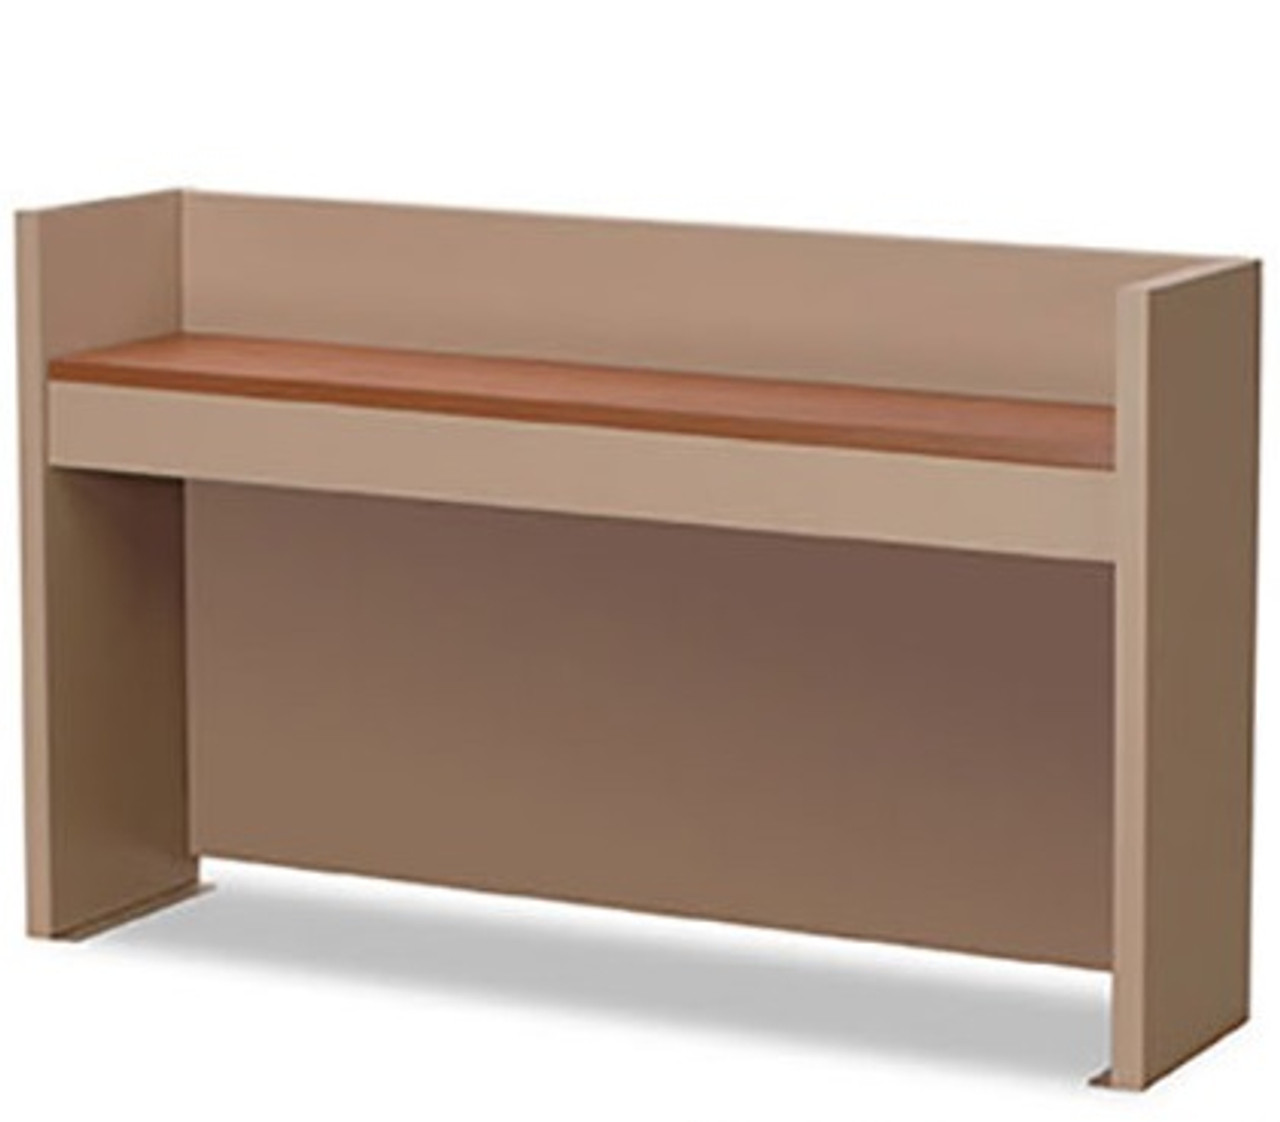 Titan Table Desk - Norix